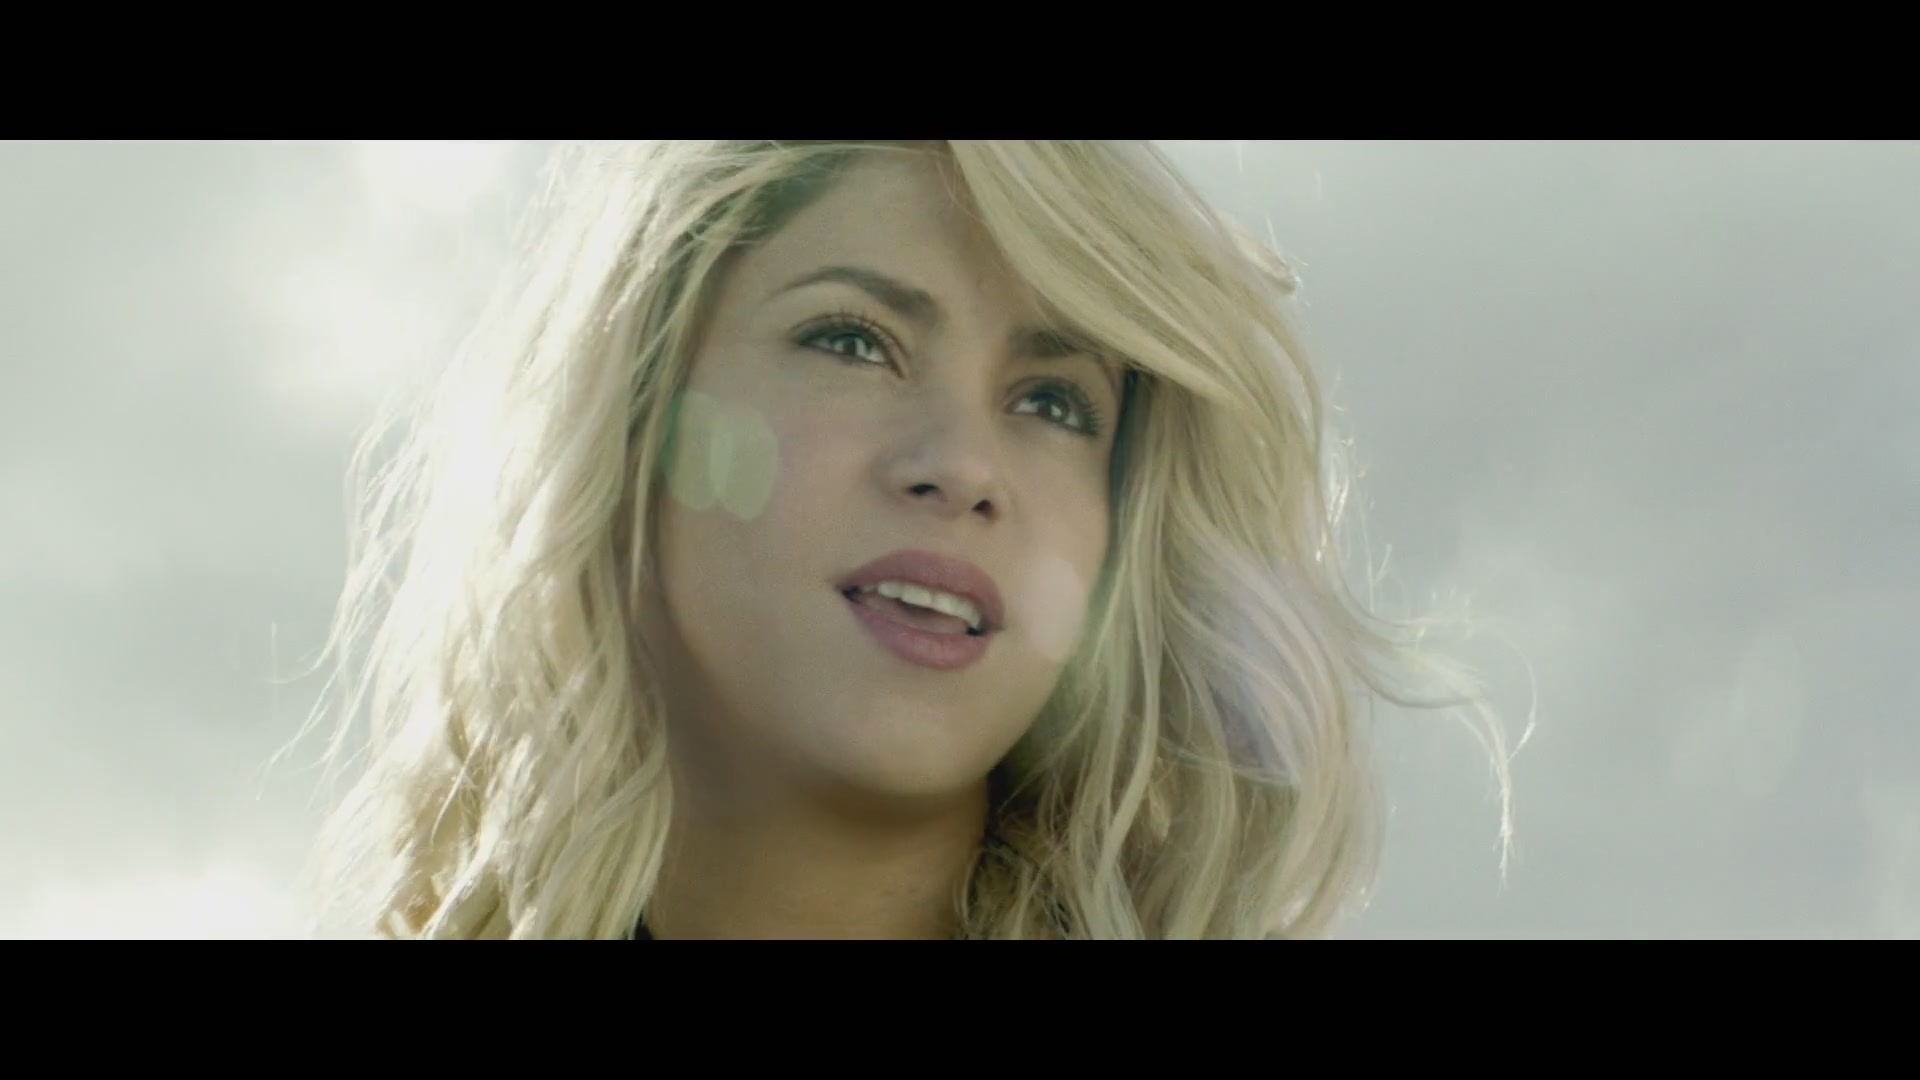 Песня английская la la la. Клип американский ла ла ла. Реклама Shakira+Dare+la+la+la.